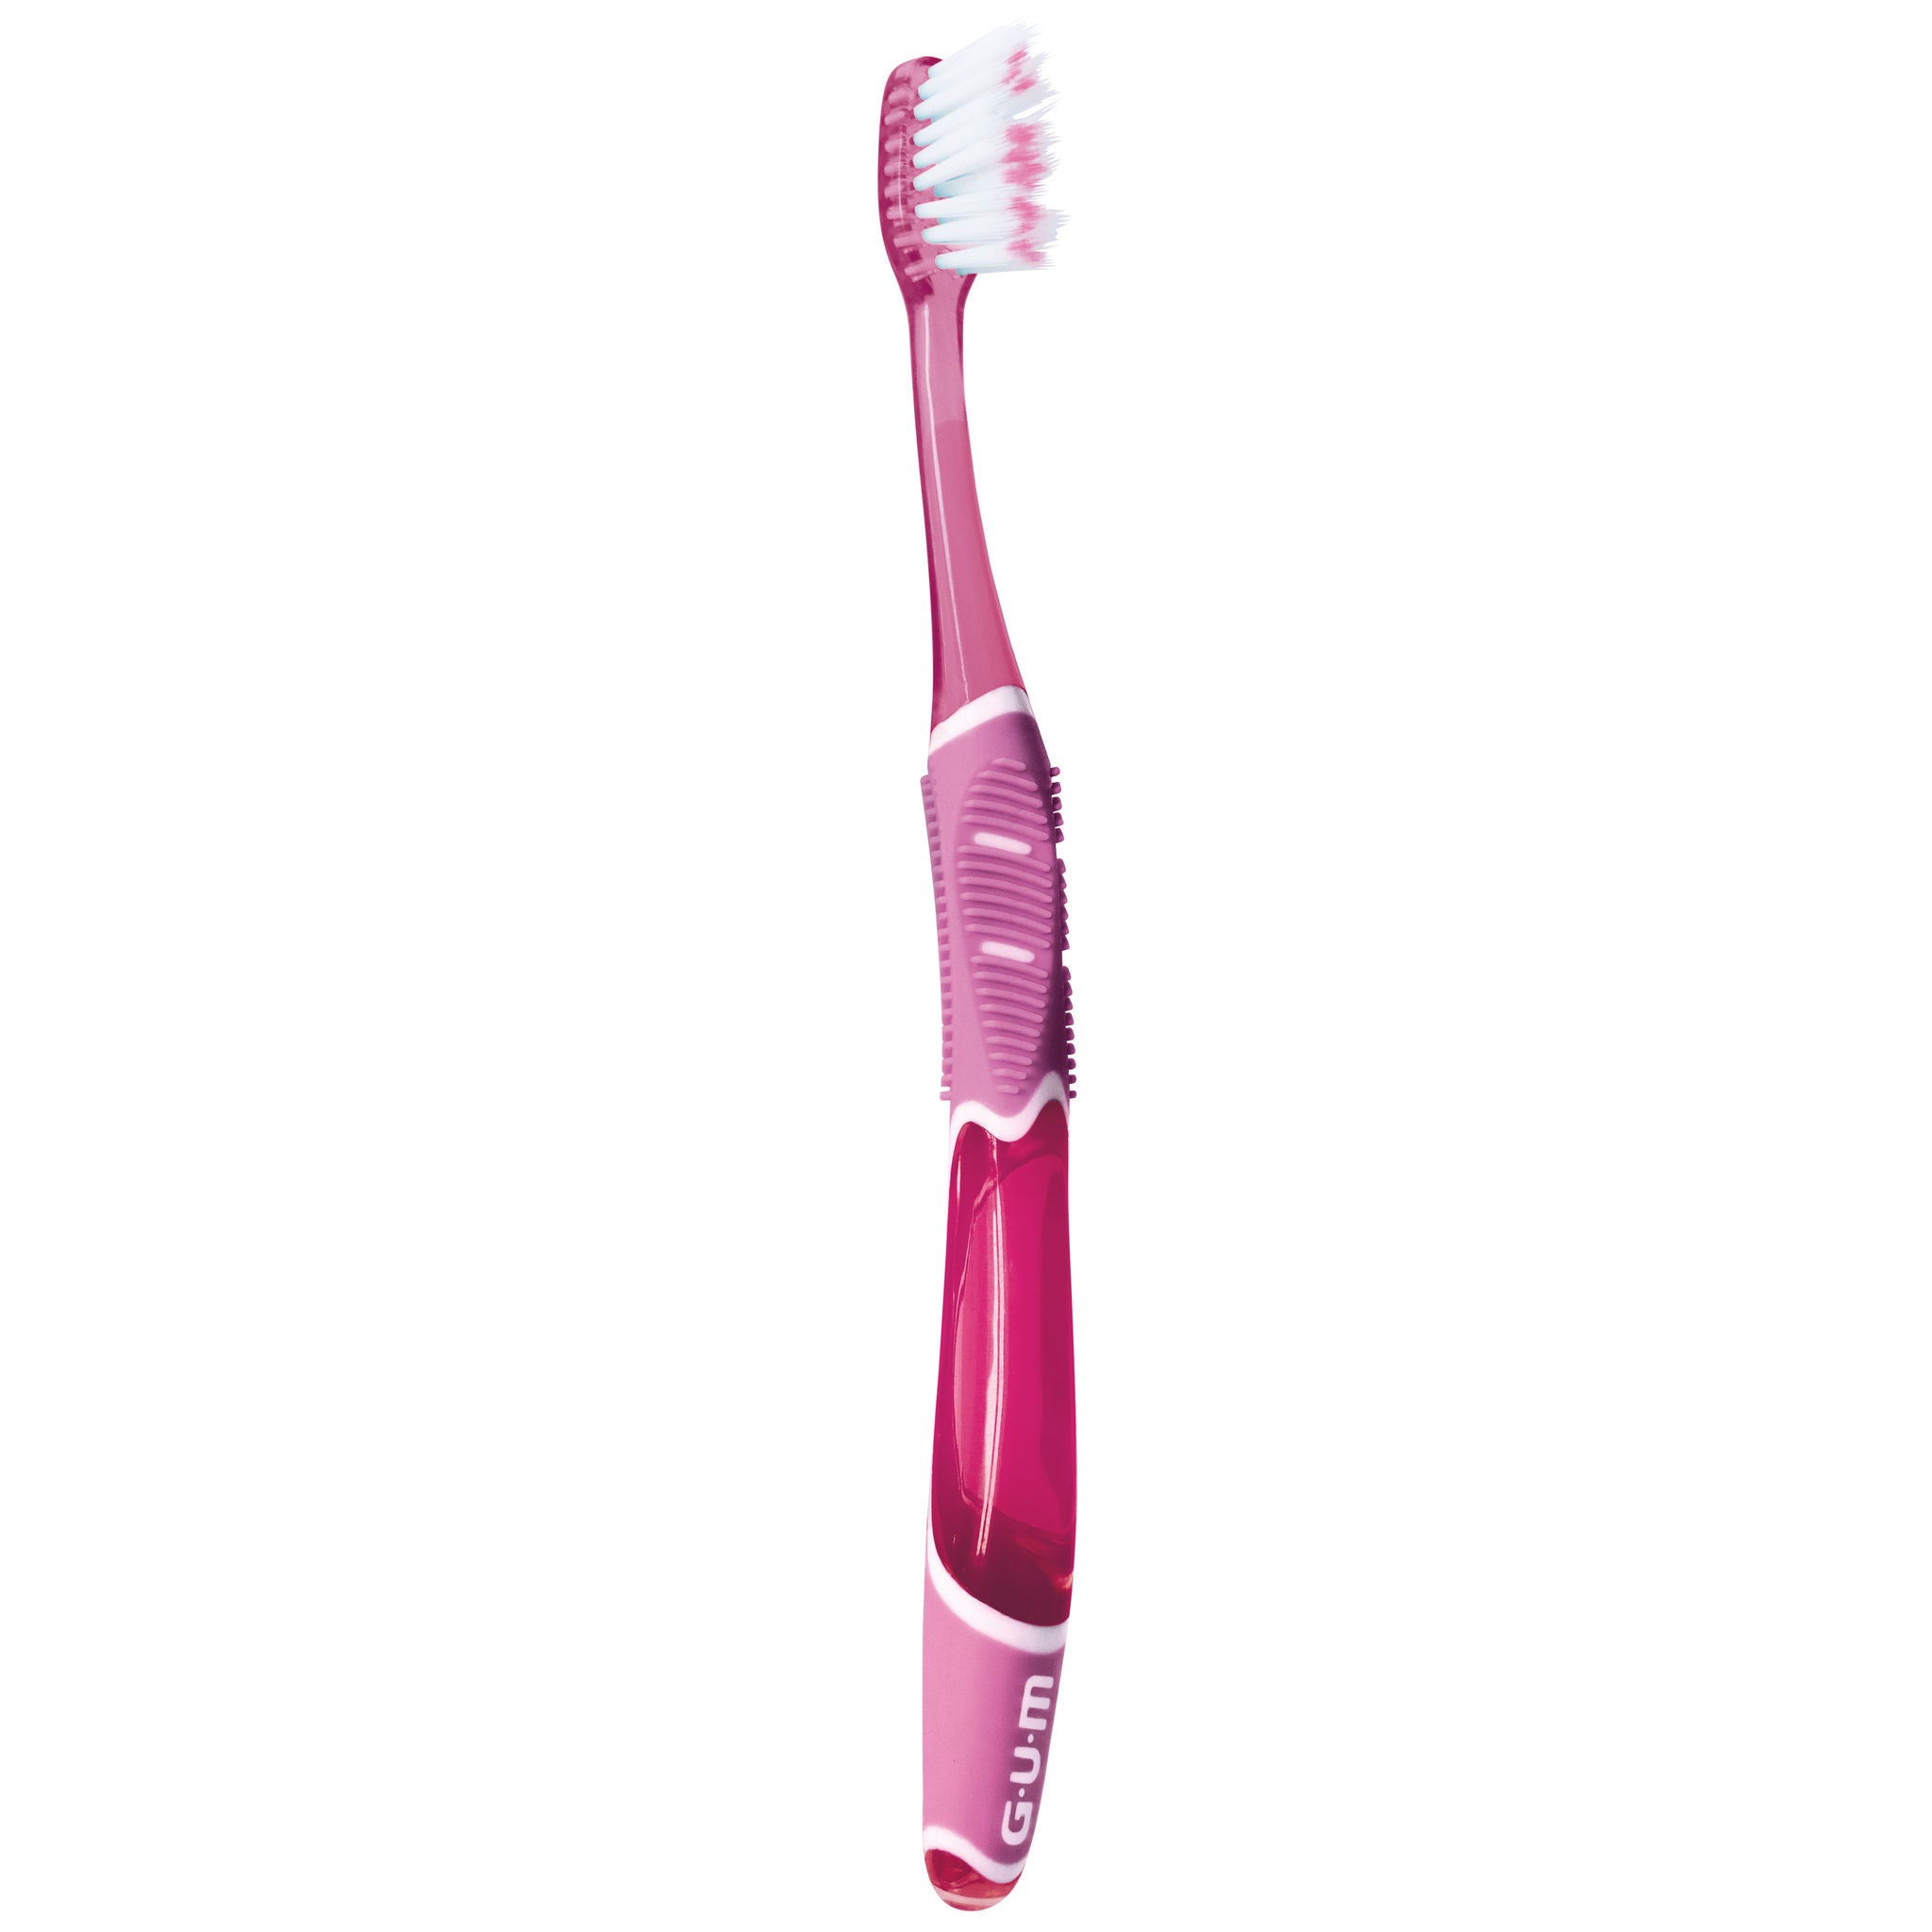 GUM PRO SENSITIVE Toothbrush | Ultra-soft bristles